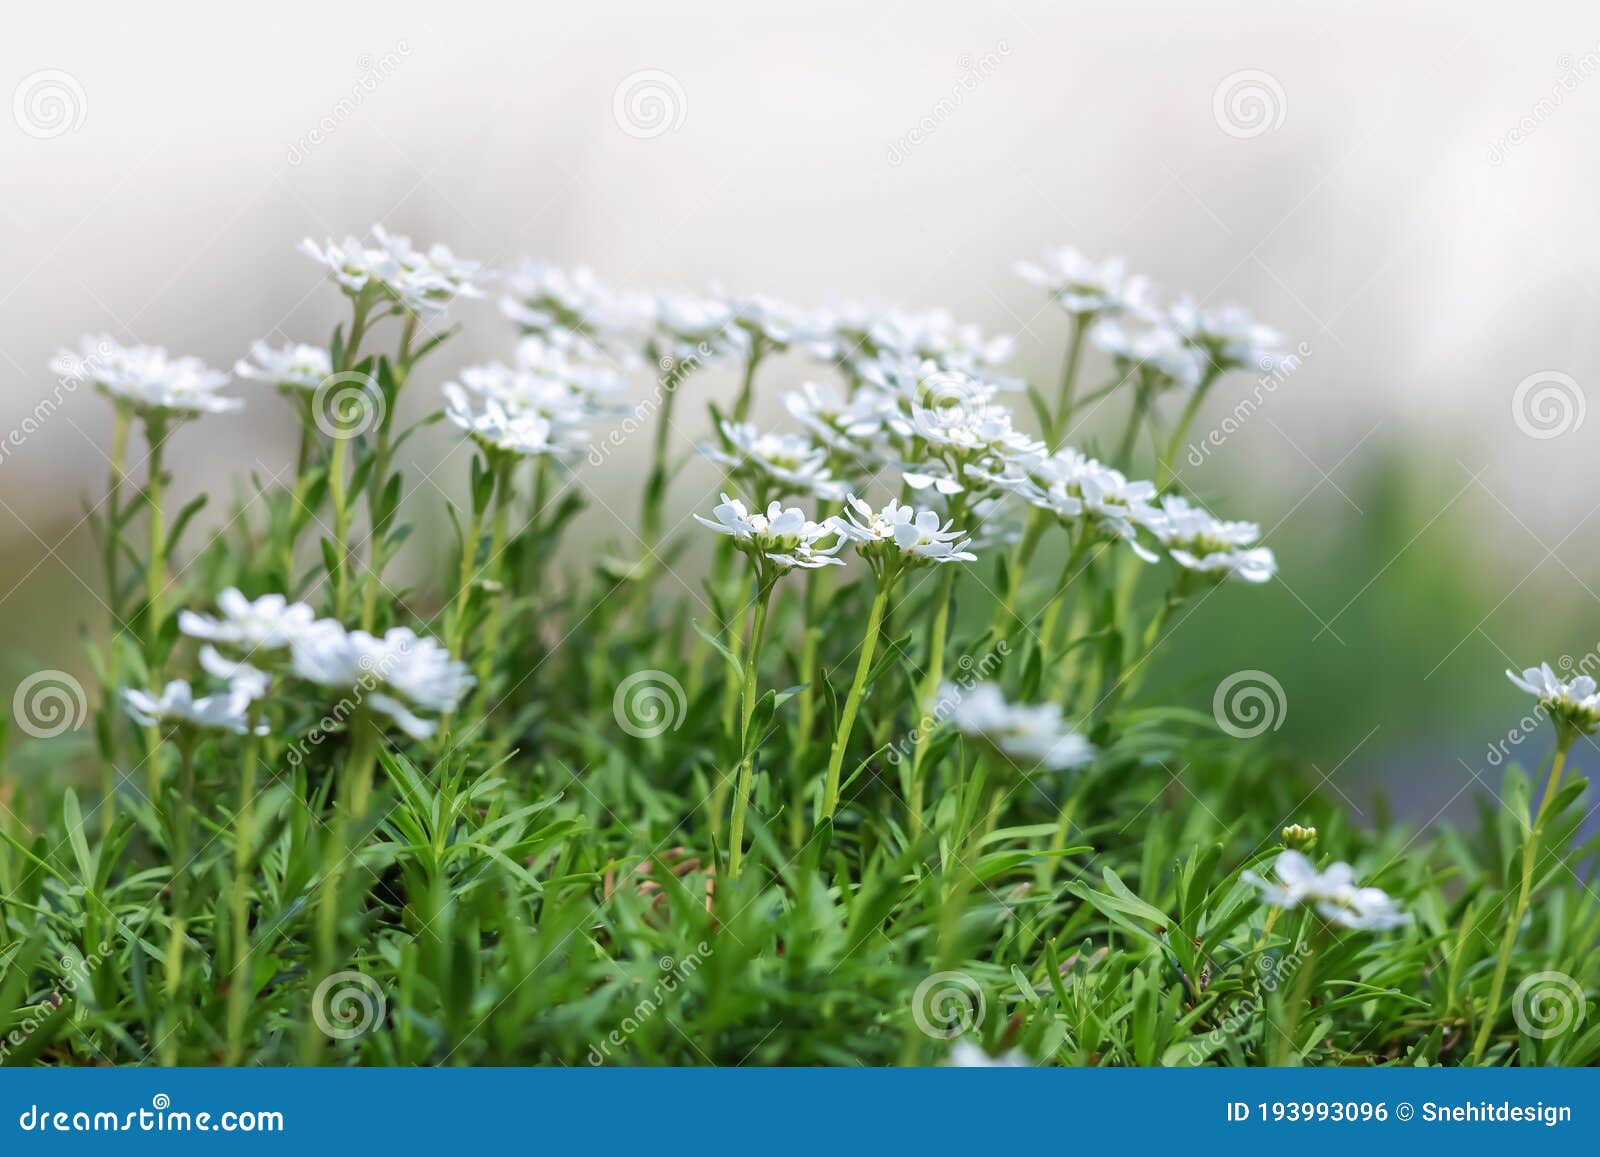 close up shot of white garden flowers